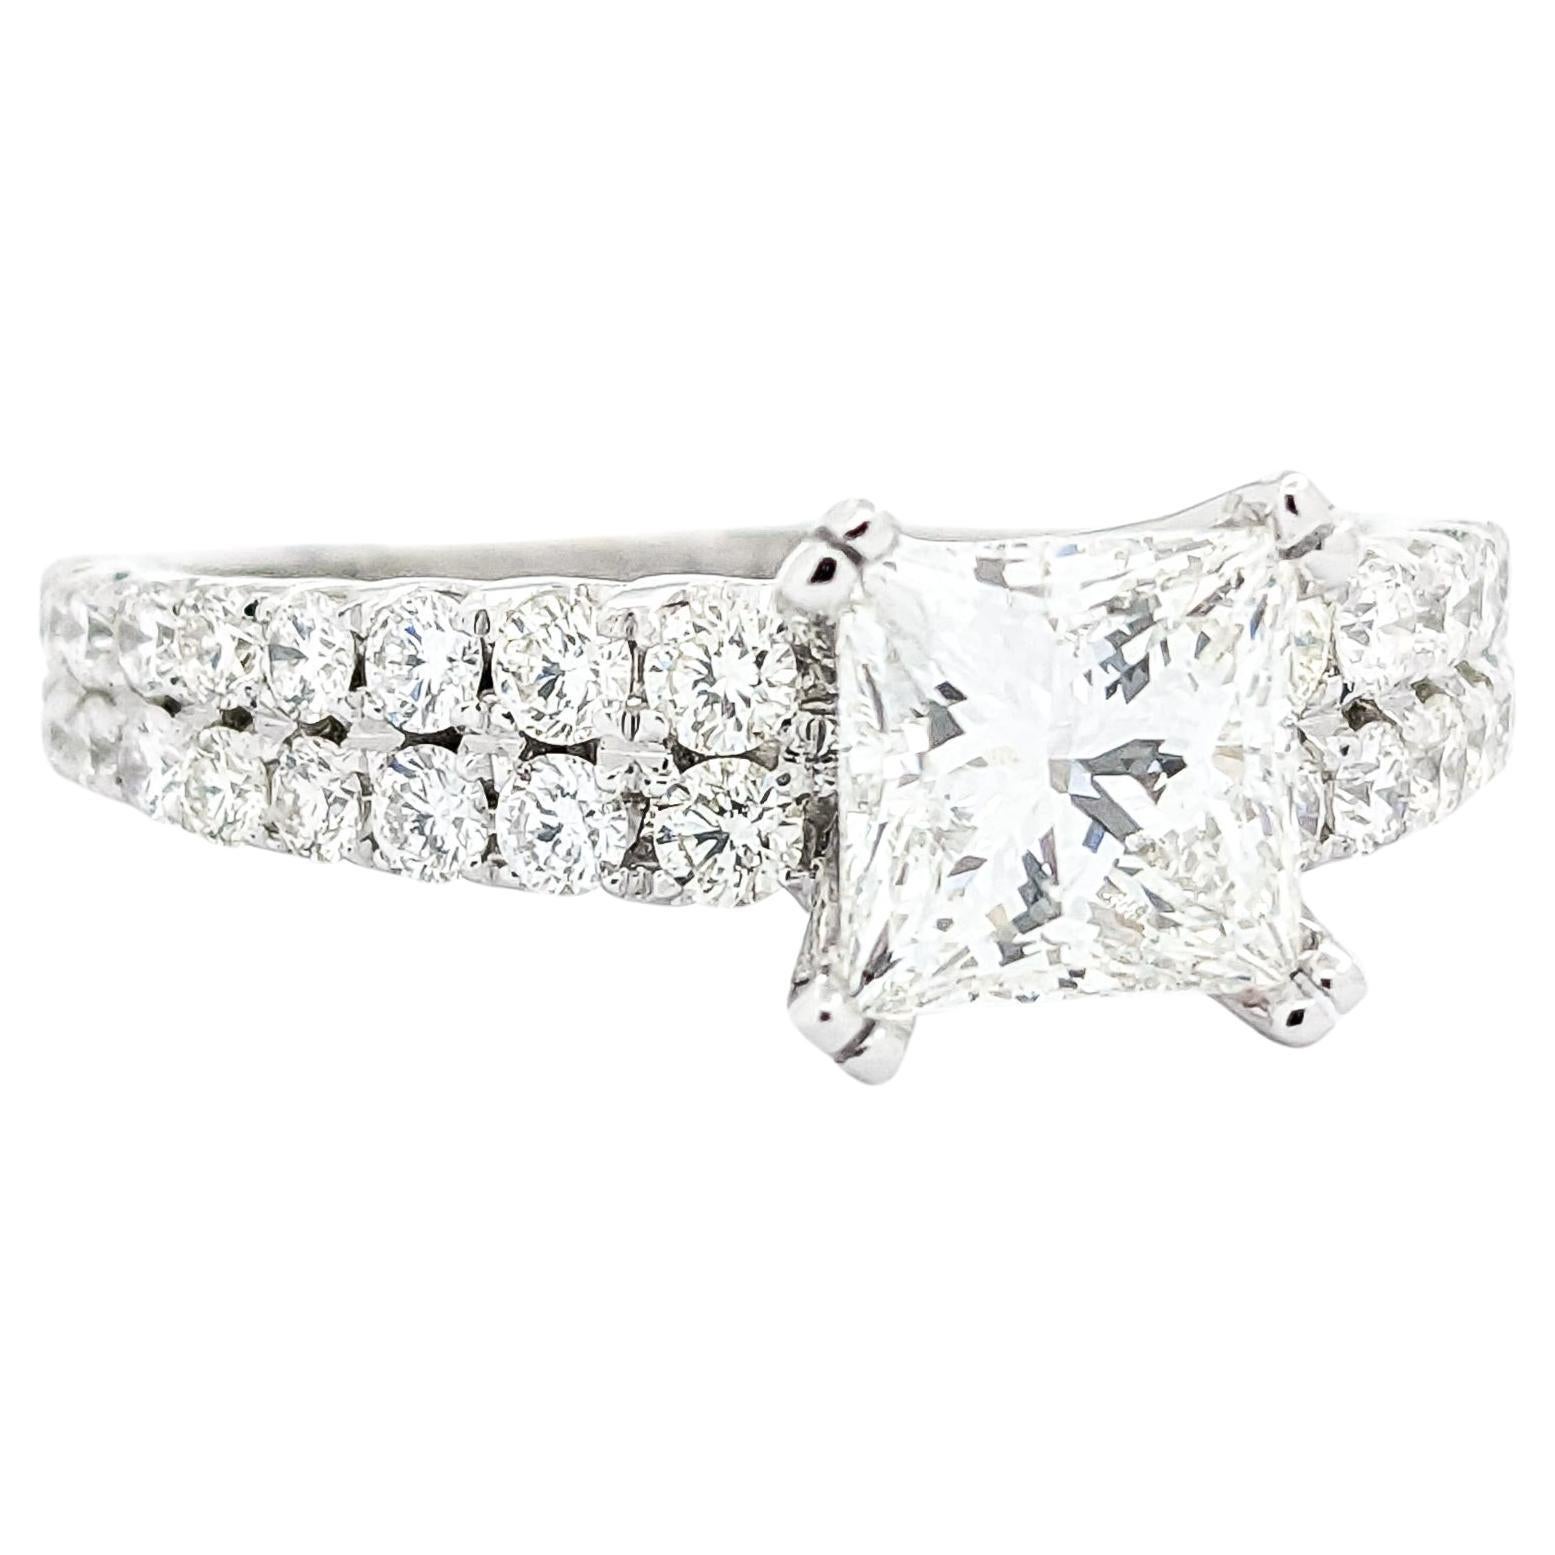 Gorgeous 1.53ct GIA Princess Cut Diamond Engagement Ring in White Gold